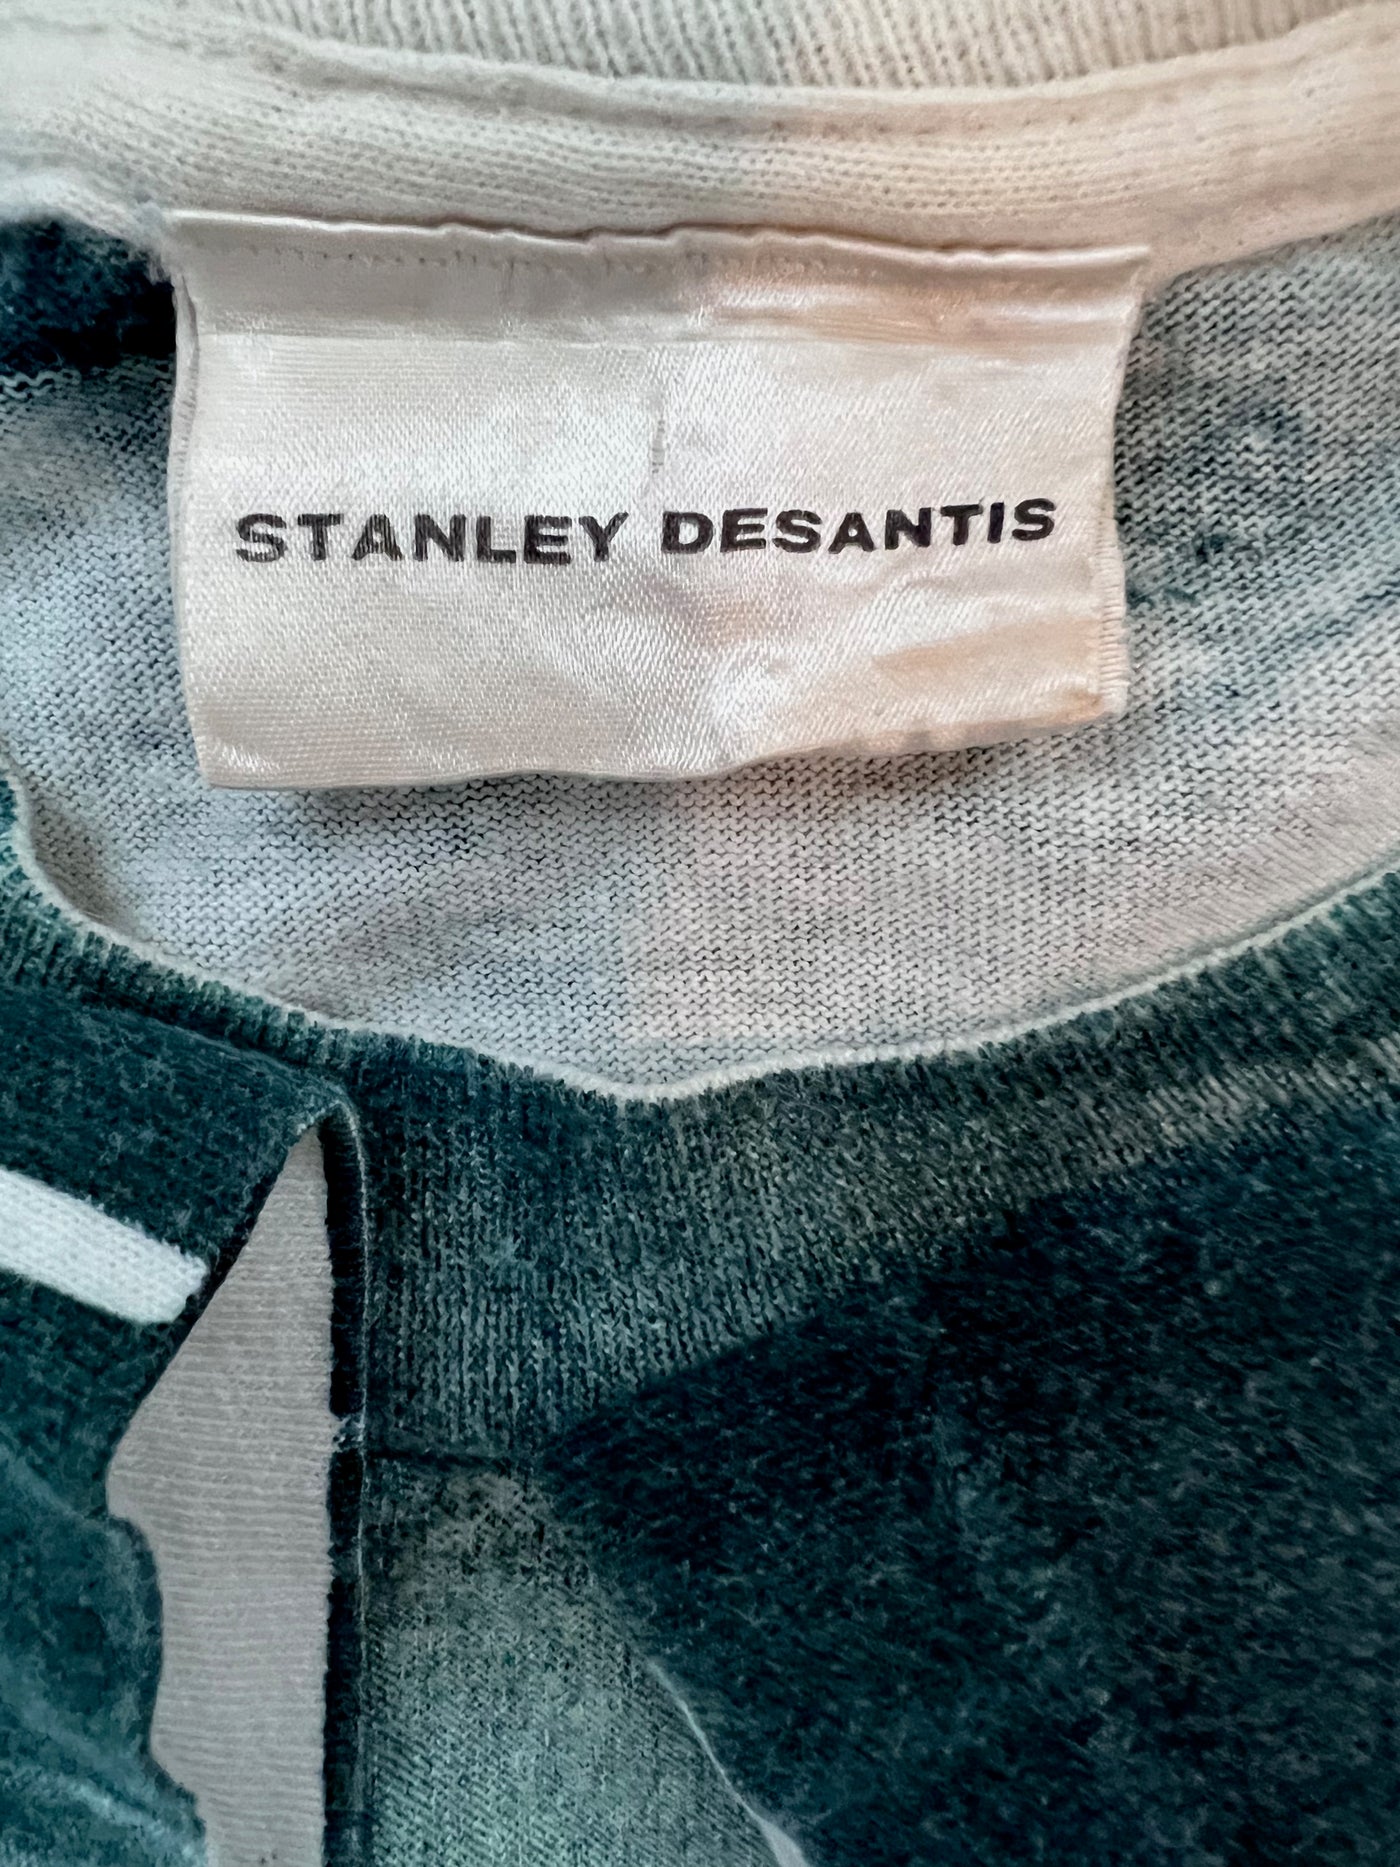 Super rare vintage 1992 Wizard of OZ Stanley Desantis Dorothy crystal ball T-shirt. XL